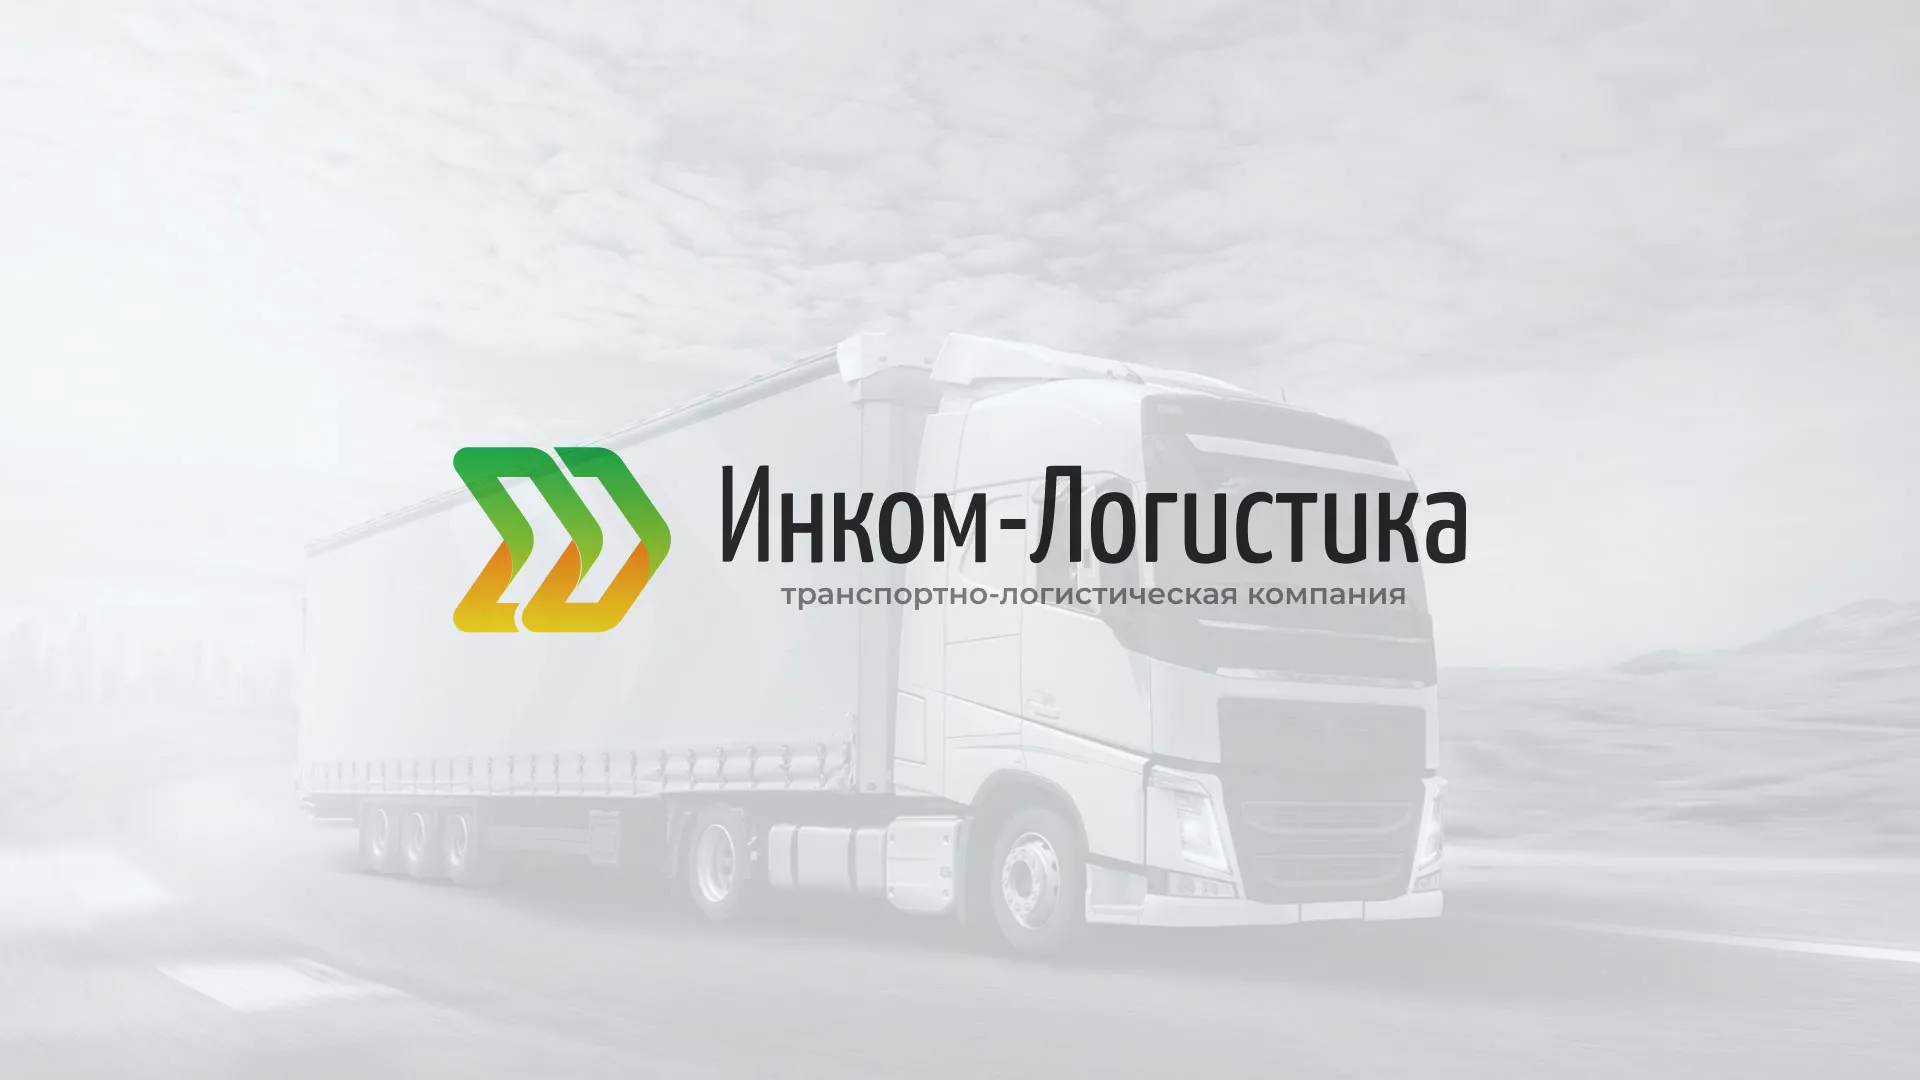 Разработка логотипа и сайта компании «Инком-Логистика» в Чкаловске